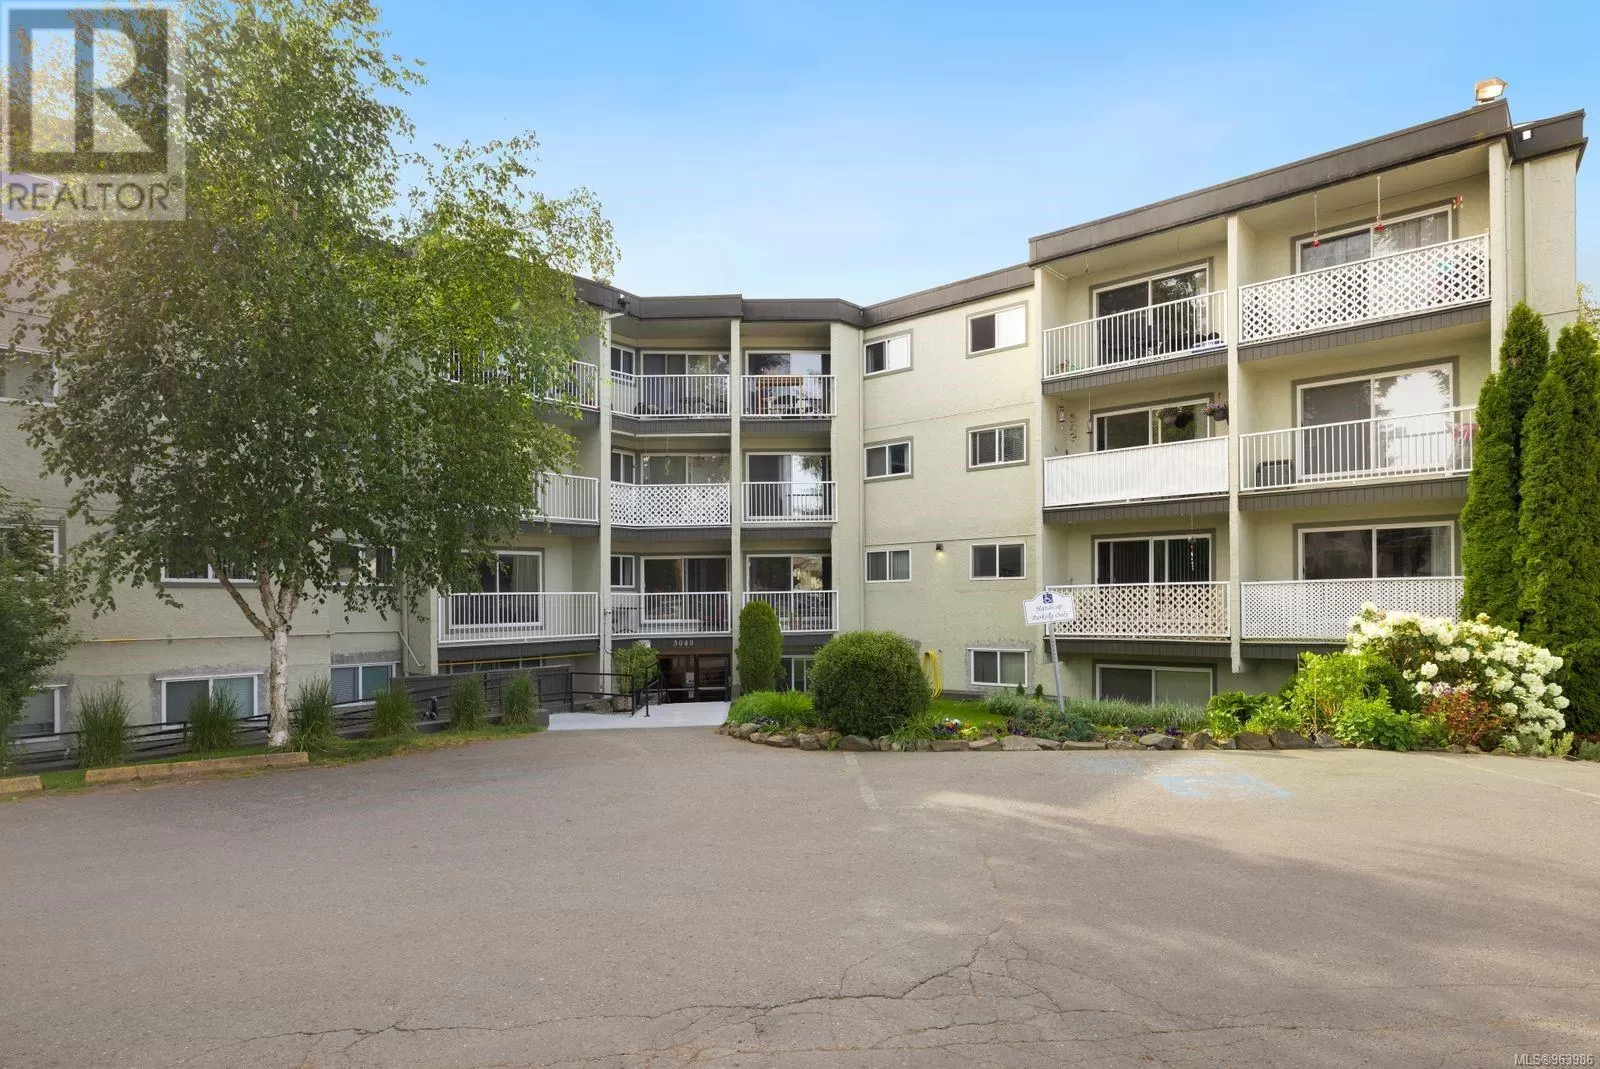 Apartment for rent: 112 3040 Pine St, Chemainus, British Columbia V0R 1K1